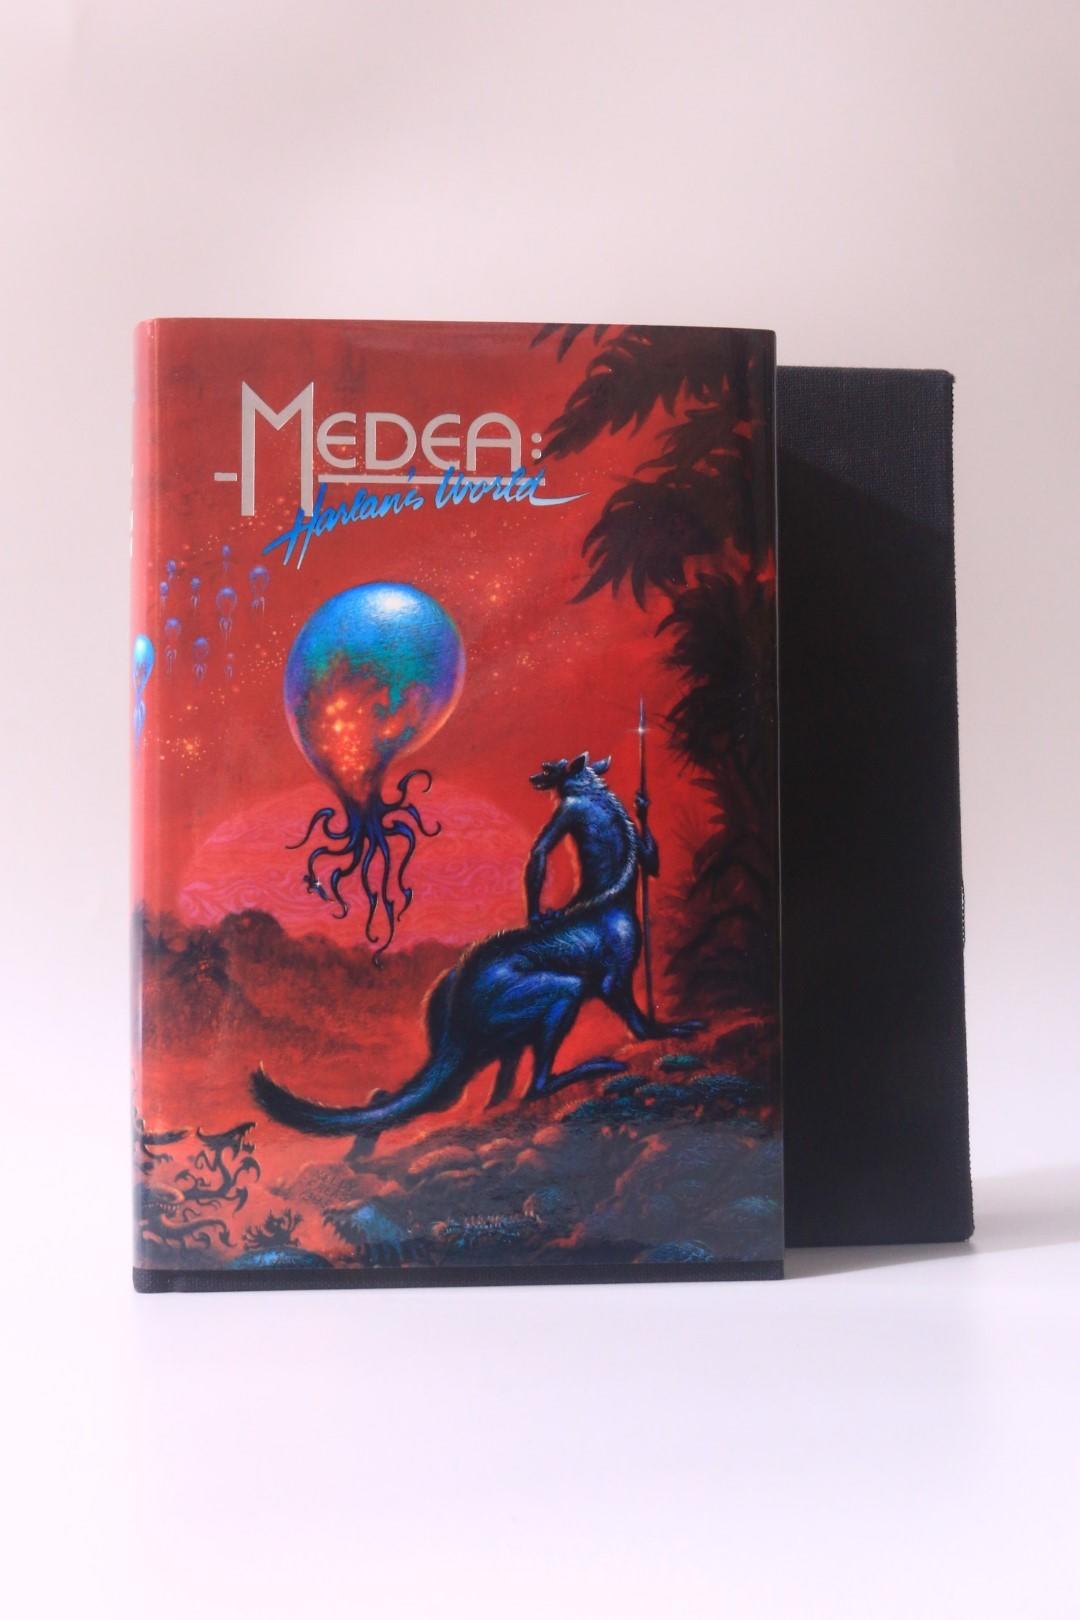 Harlan Ellison [ed.] - Medea: Harlan's World - Phantasia Press, 1985, Limited Edition. Signed